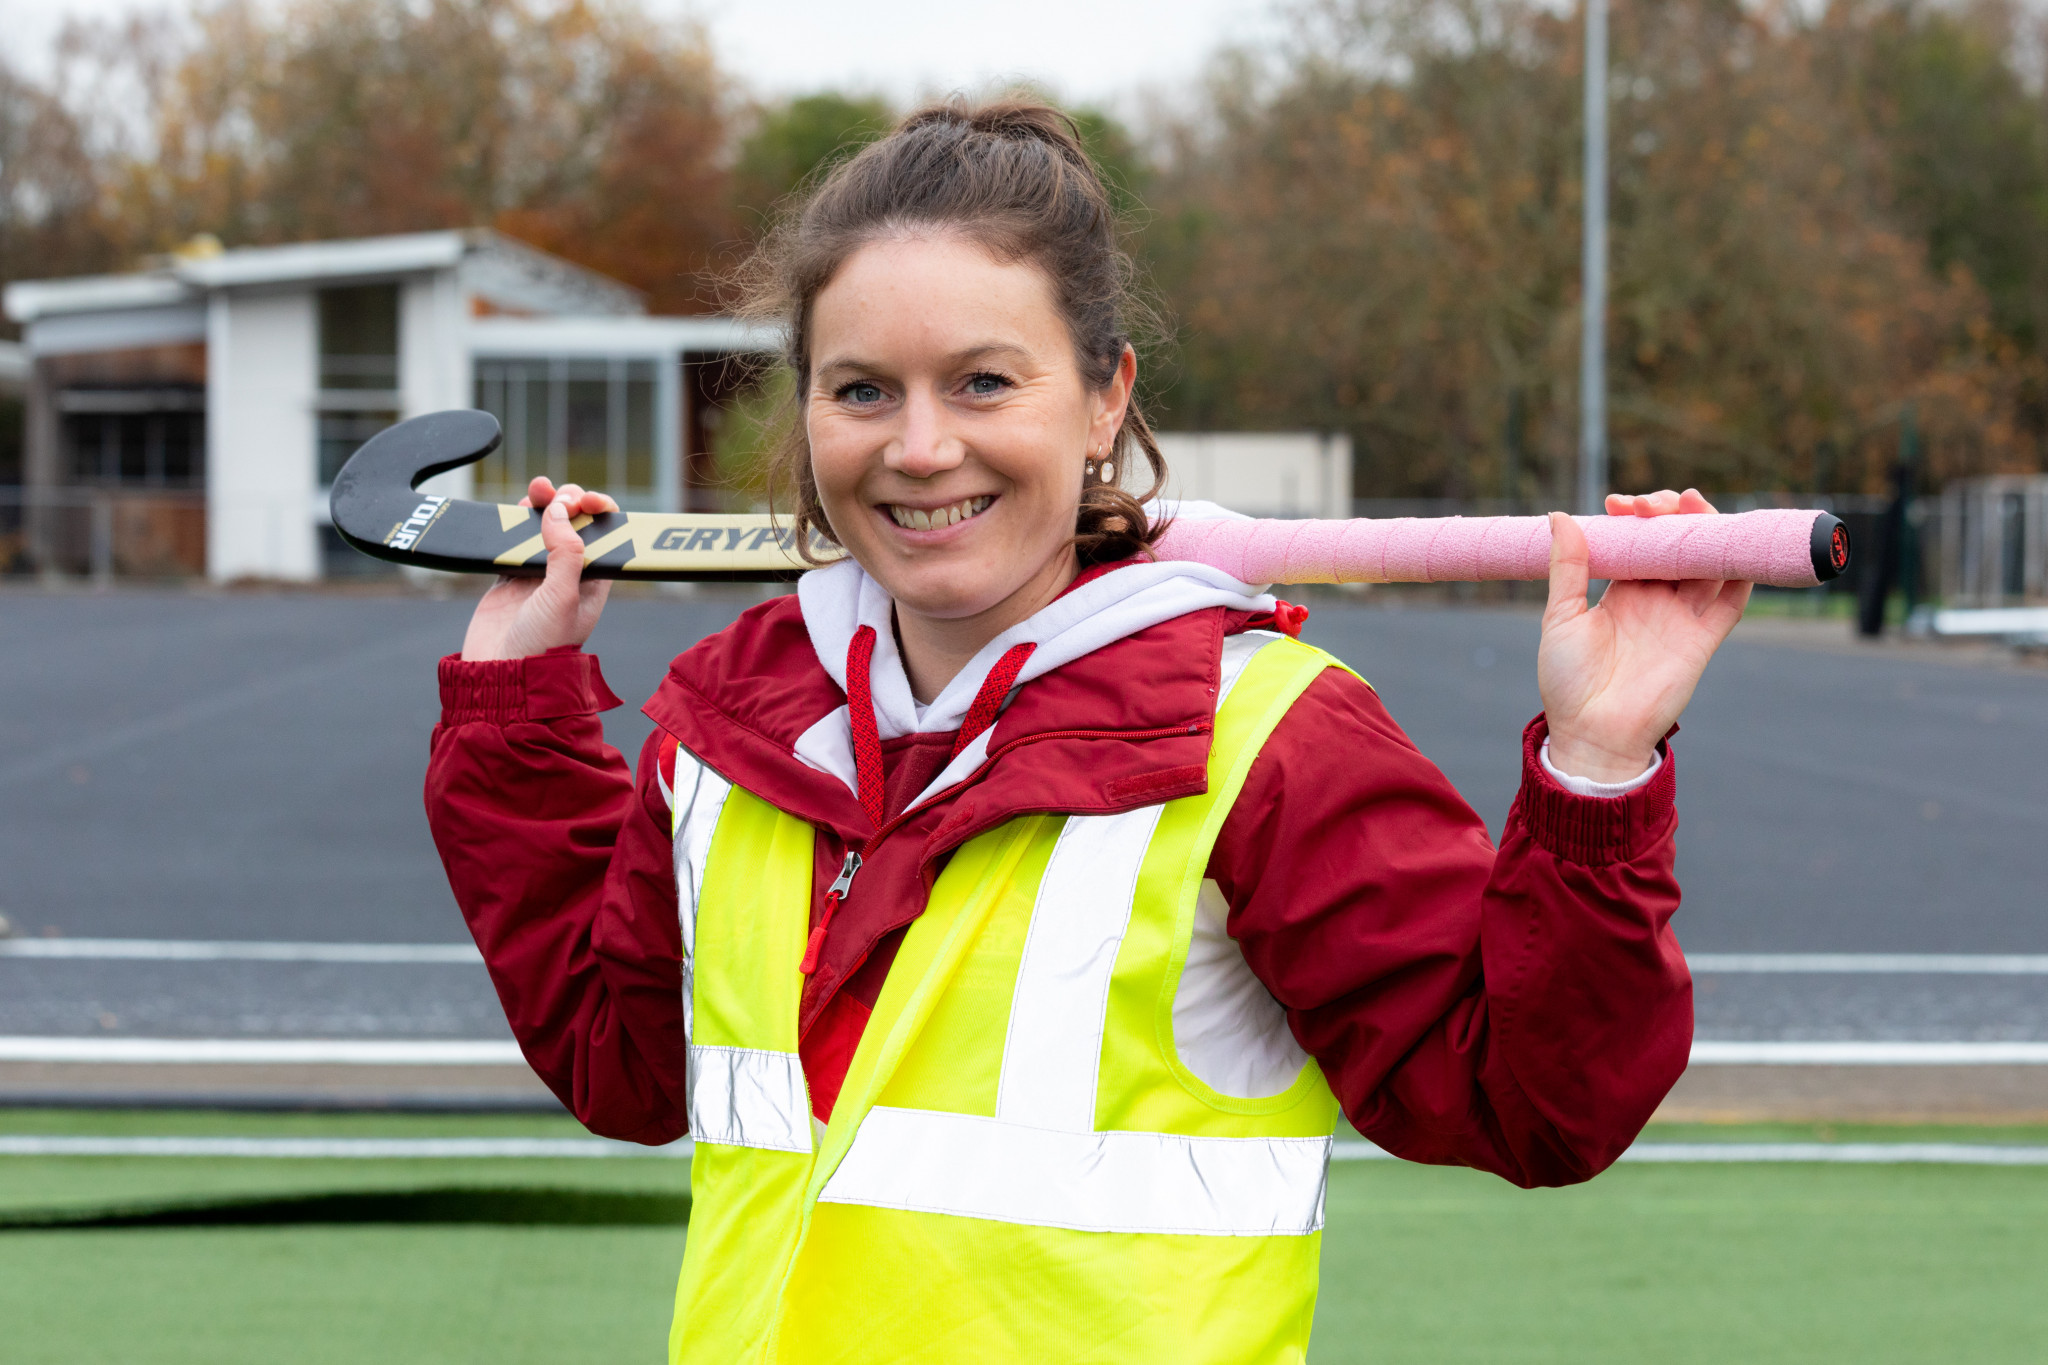 Laura Unsworth has won three Commonwealth Games hockey medals ©Birmingham 2022